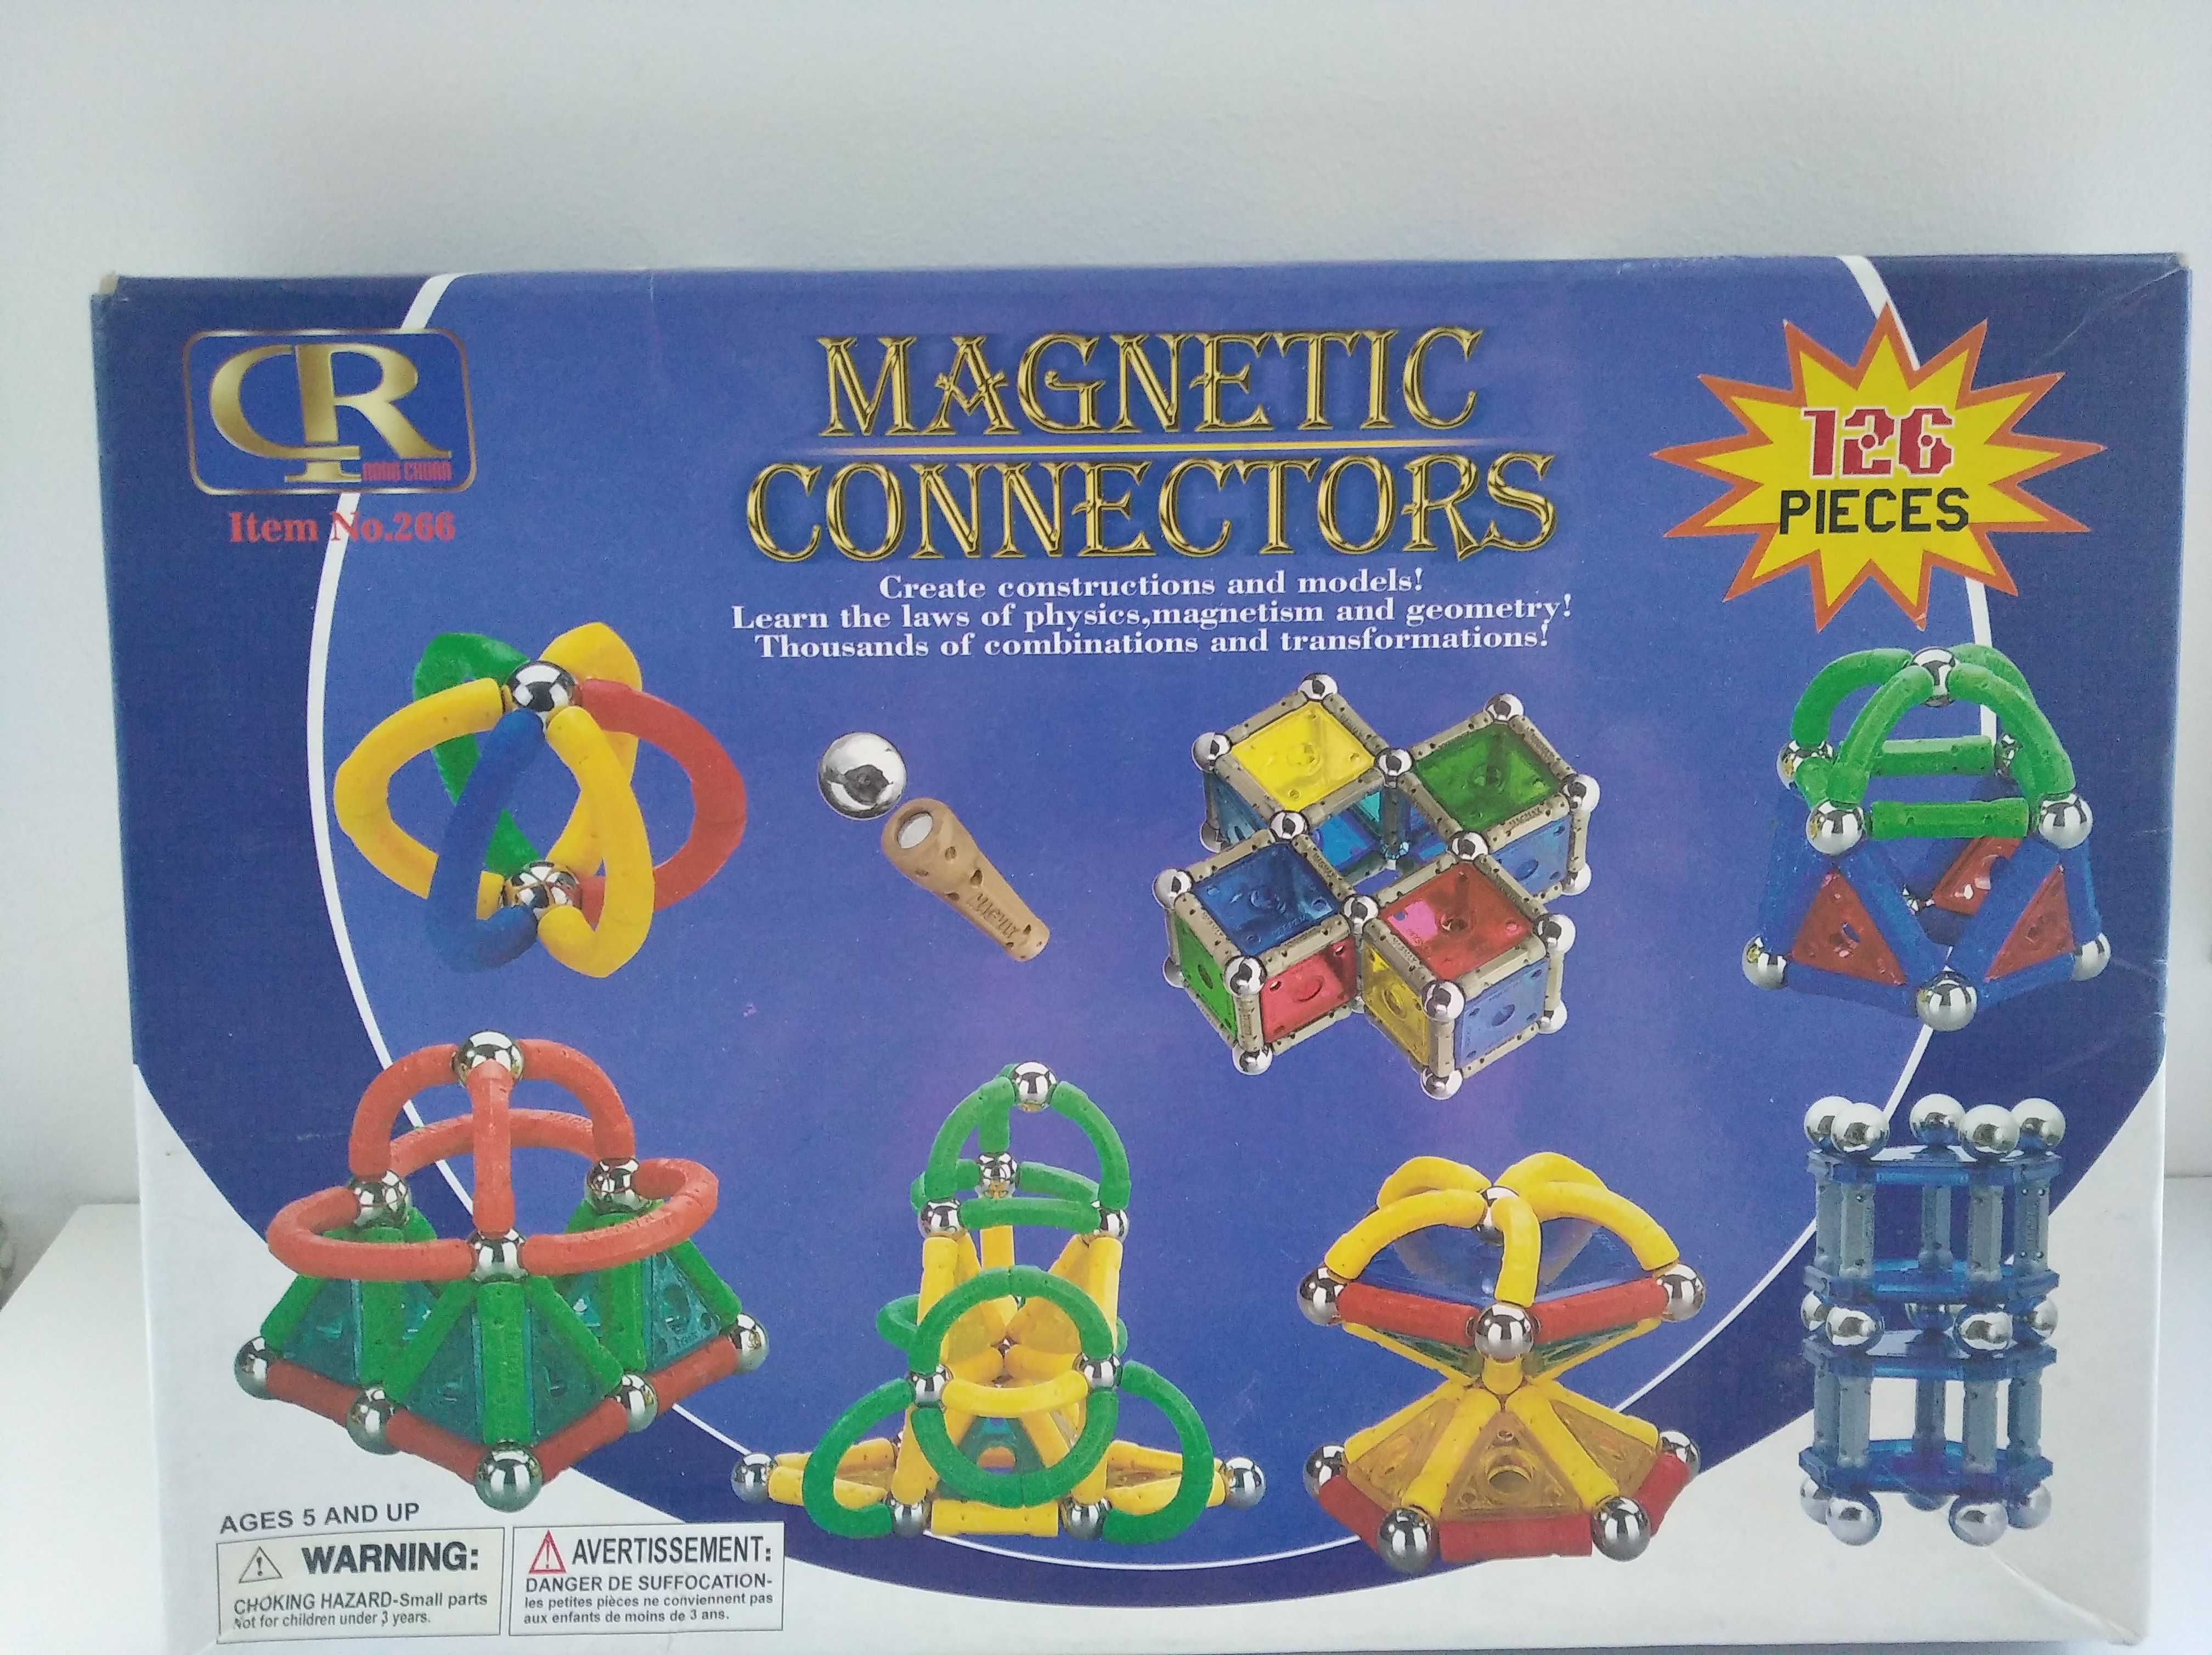 Magnettic connectors dla dzieci